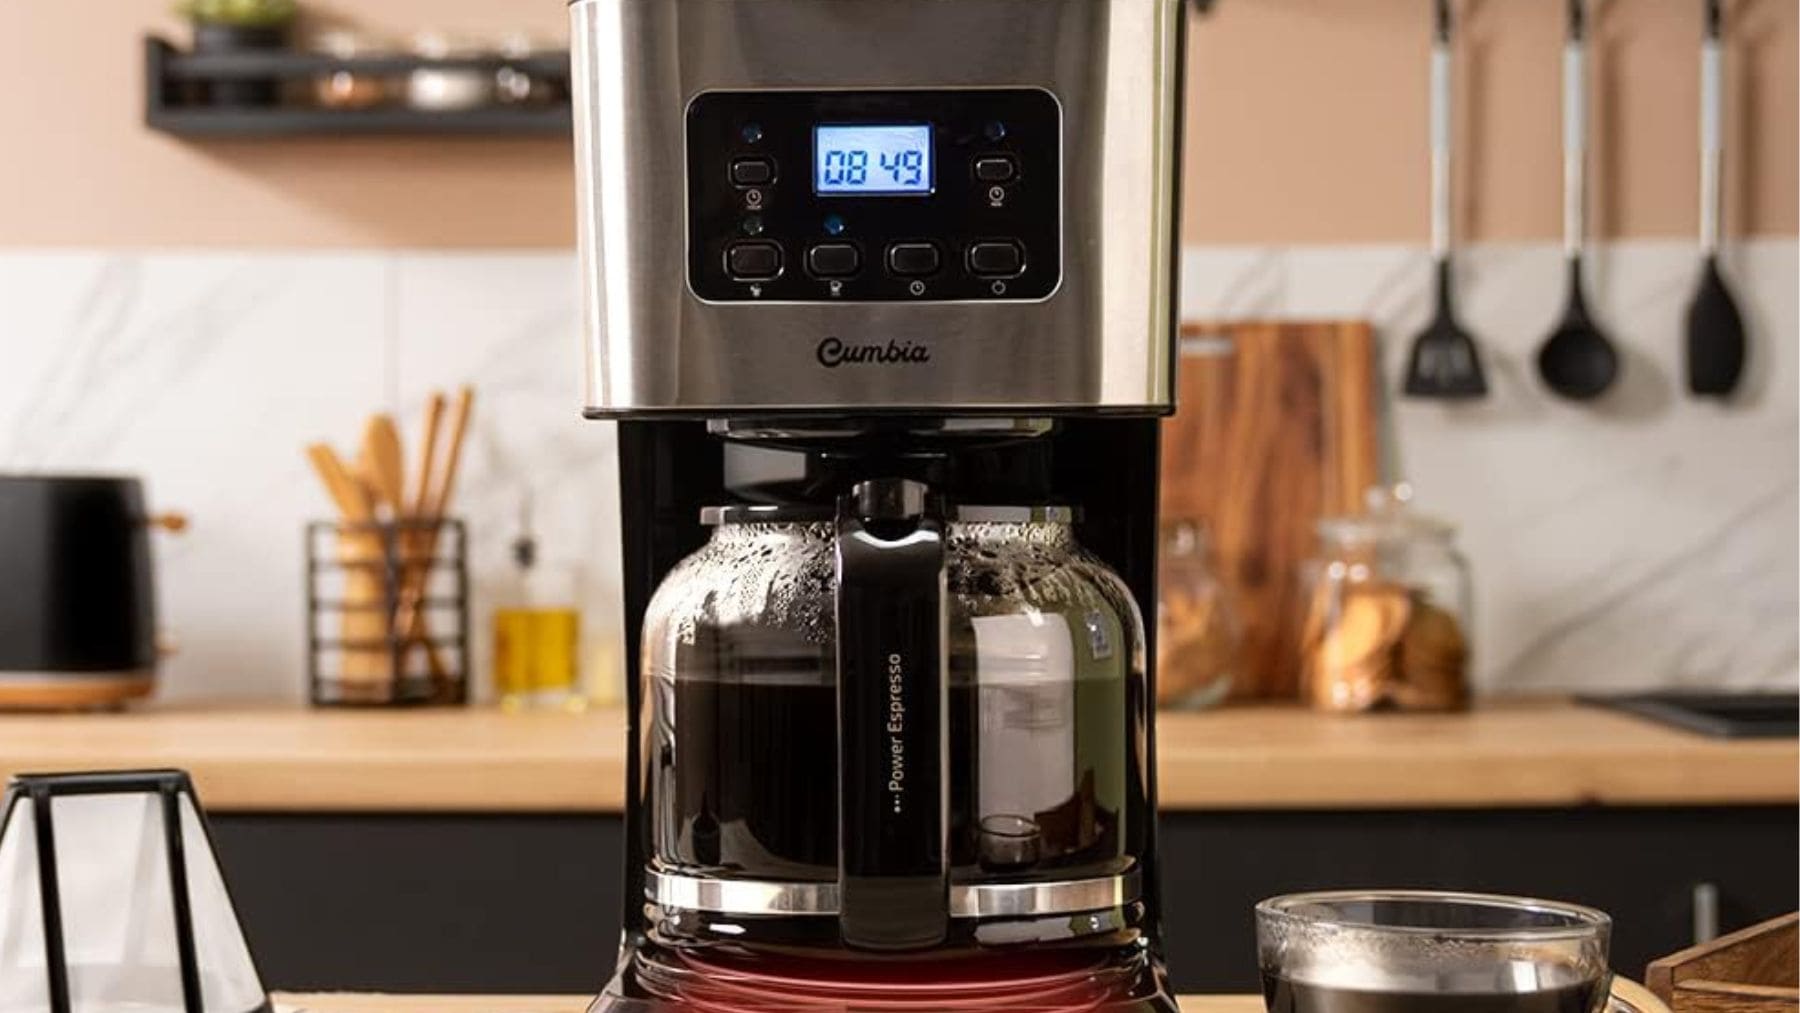 Cafetera de goteo Coffee 66 Smart Plus programable con tecnología